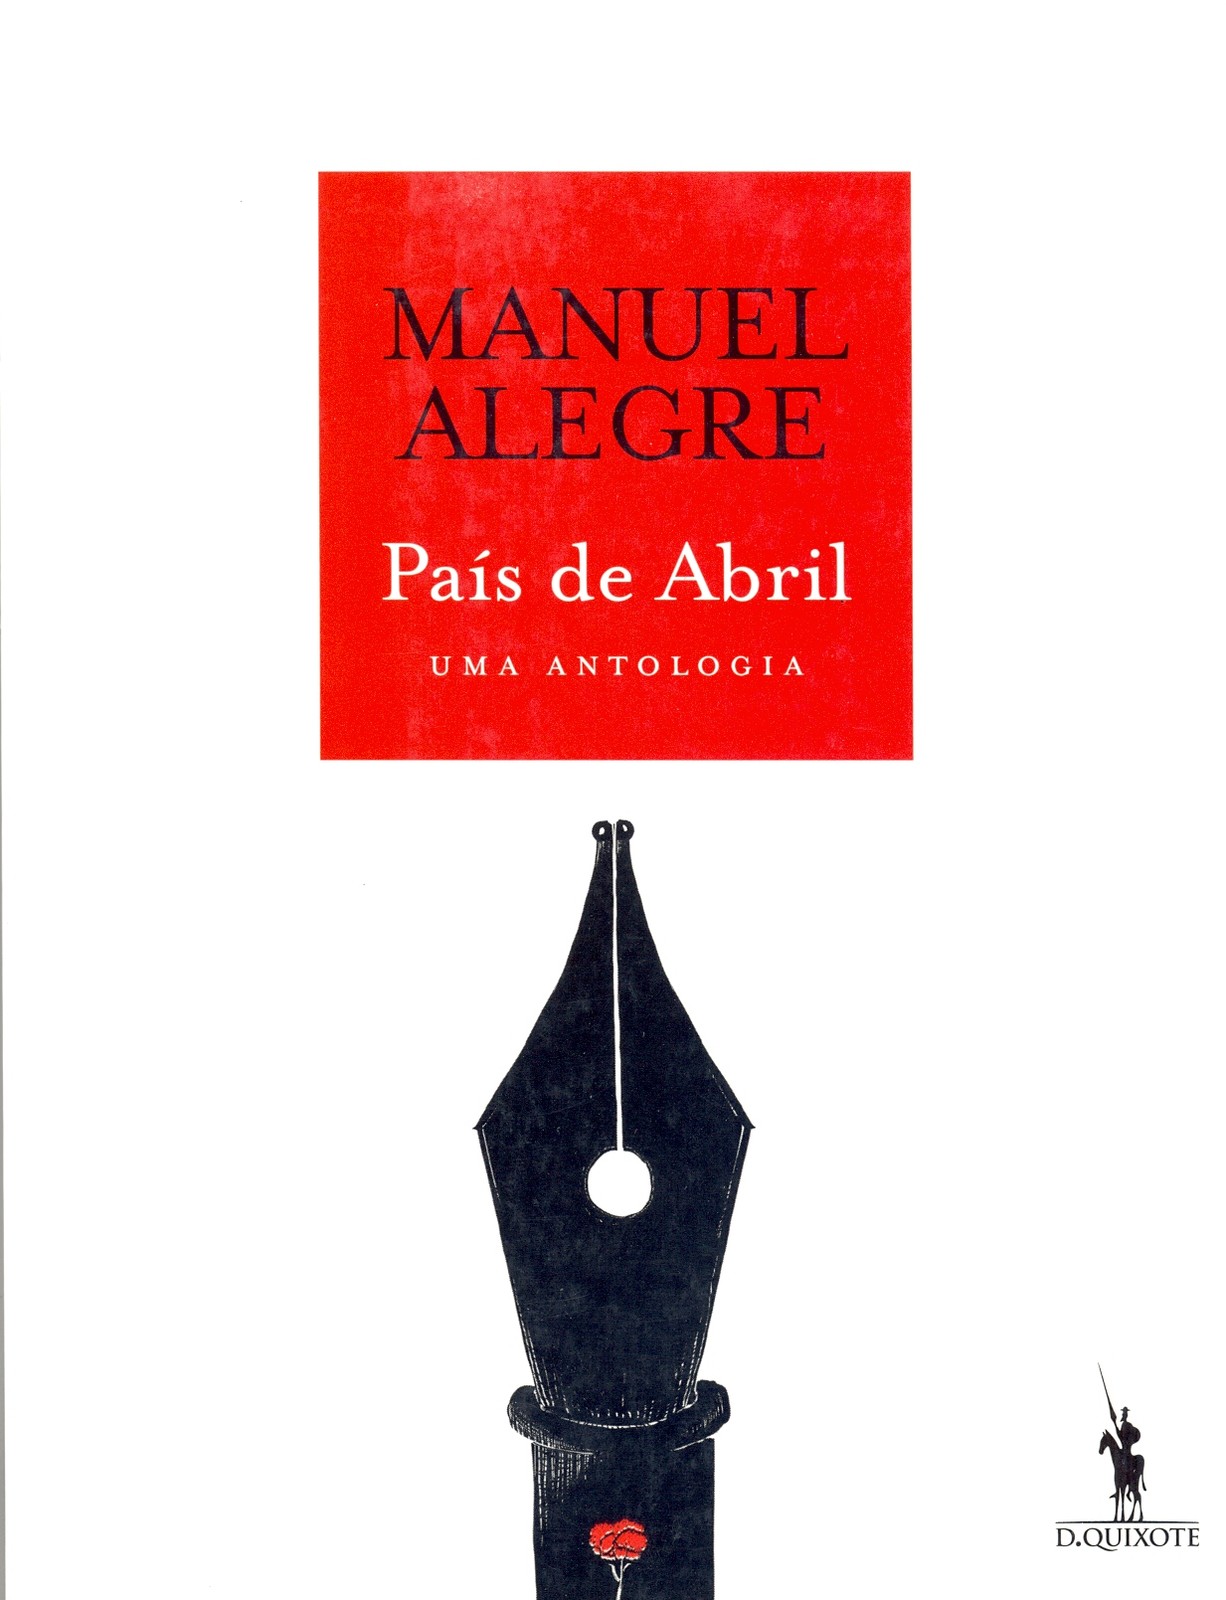 Manuel Alegre - País de Abril